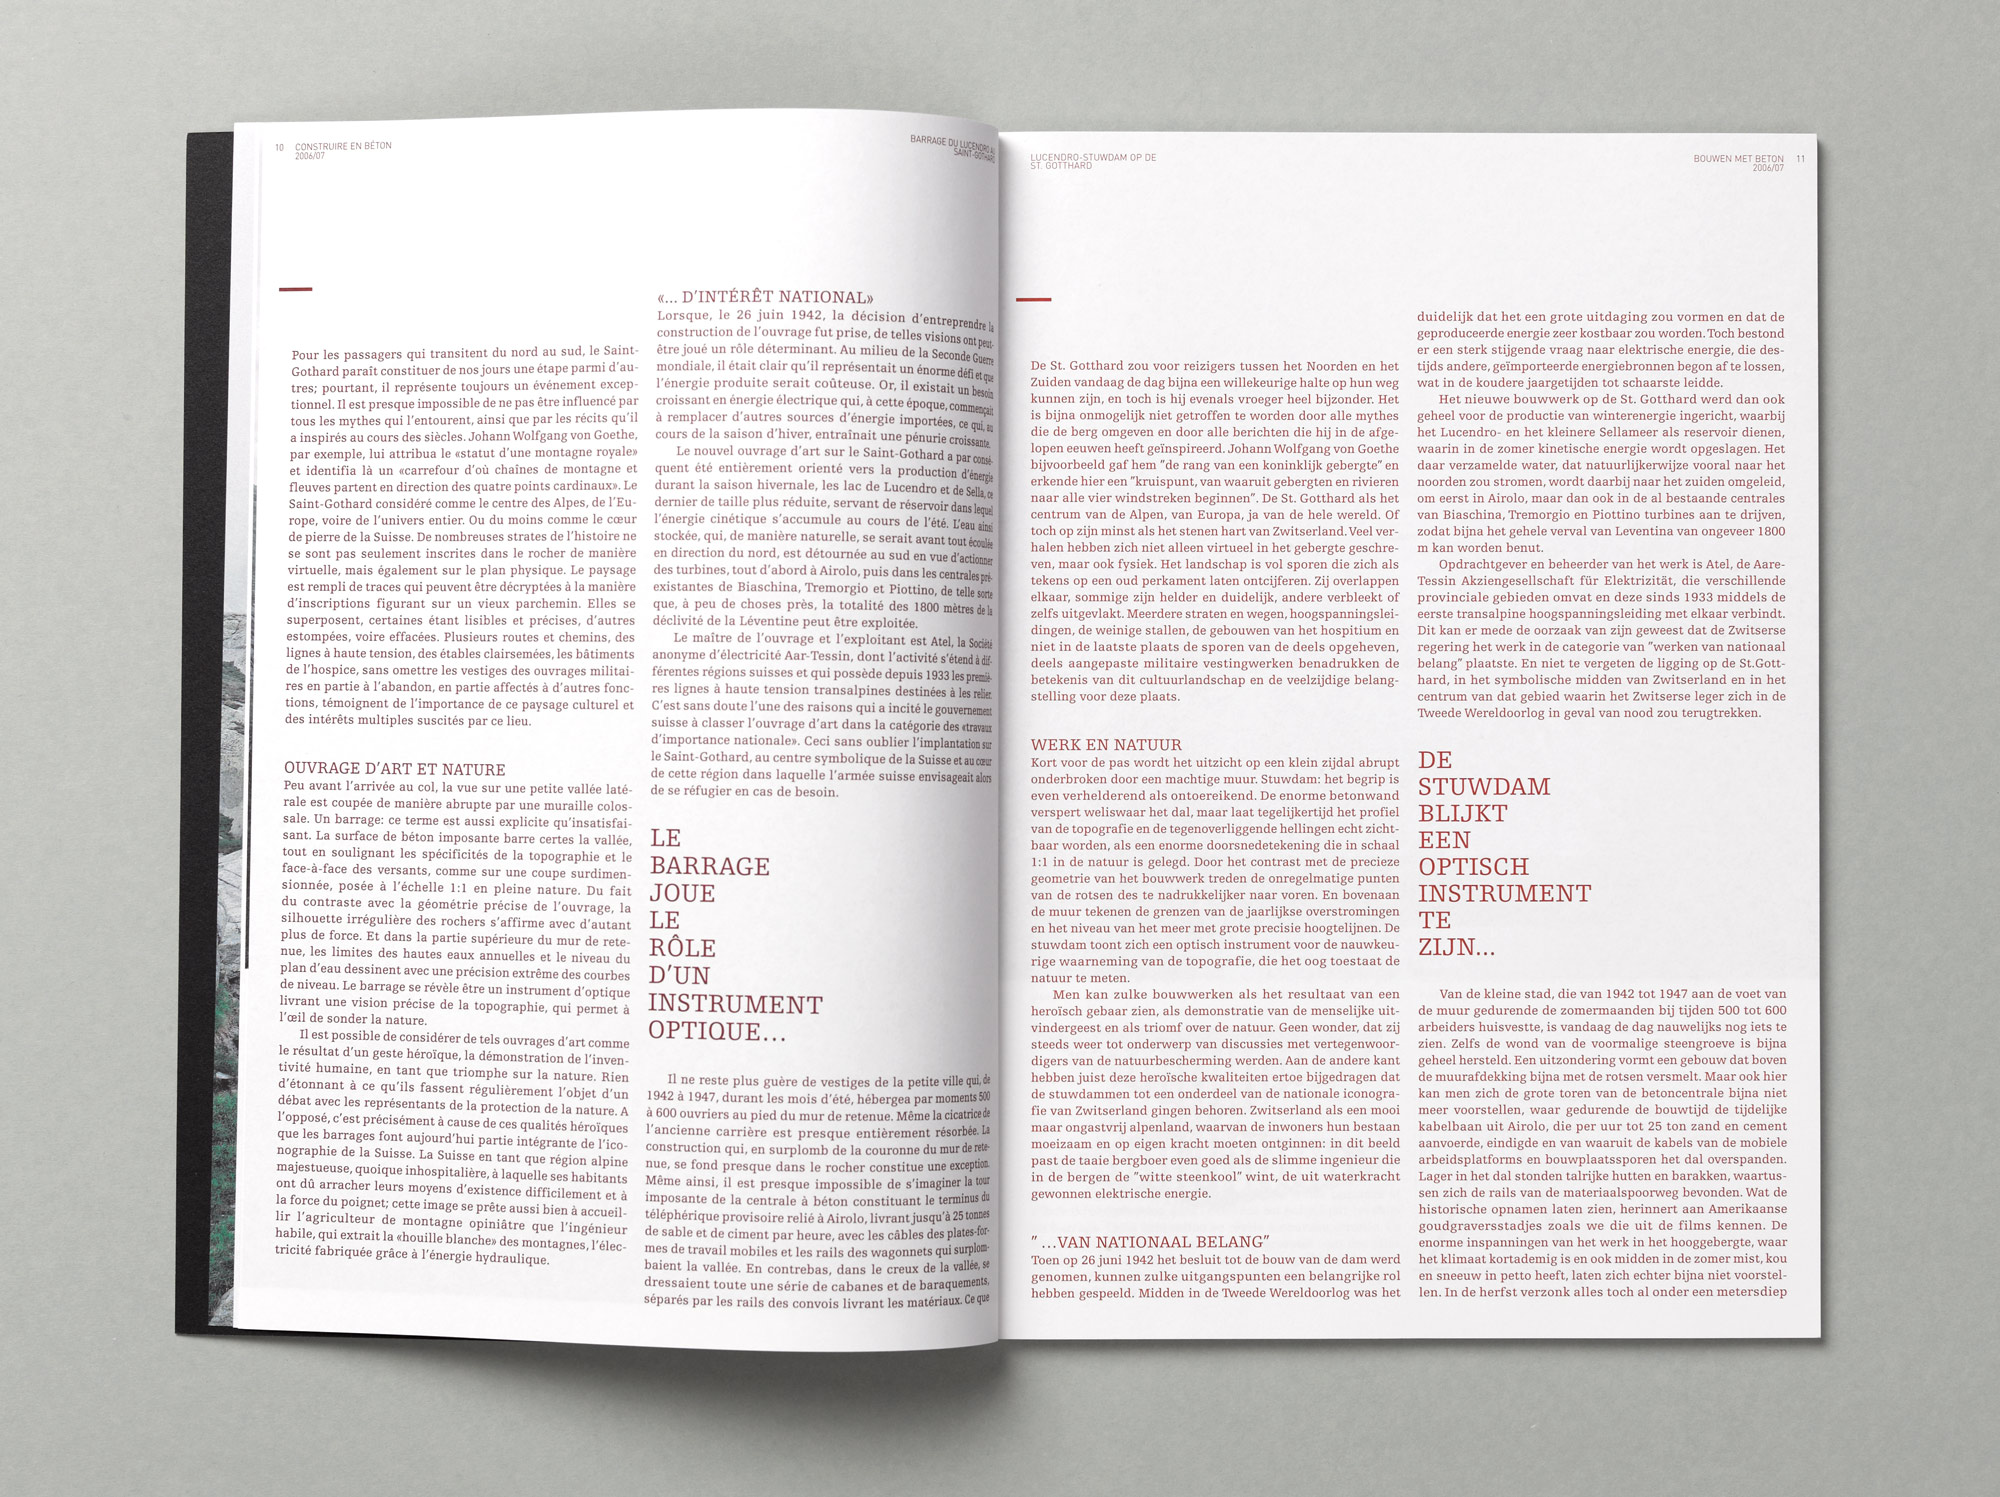 Bossard Wettstein Project - Betonsuisse - Print-Publikation 06/07